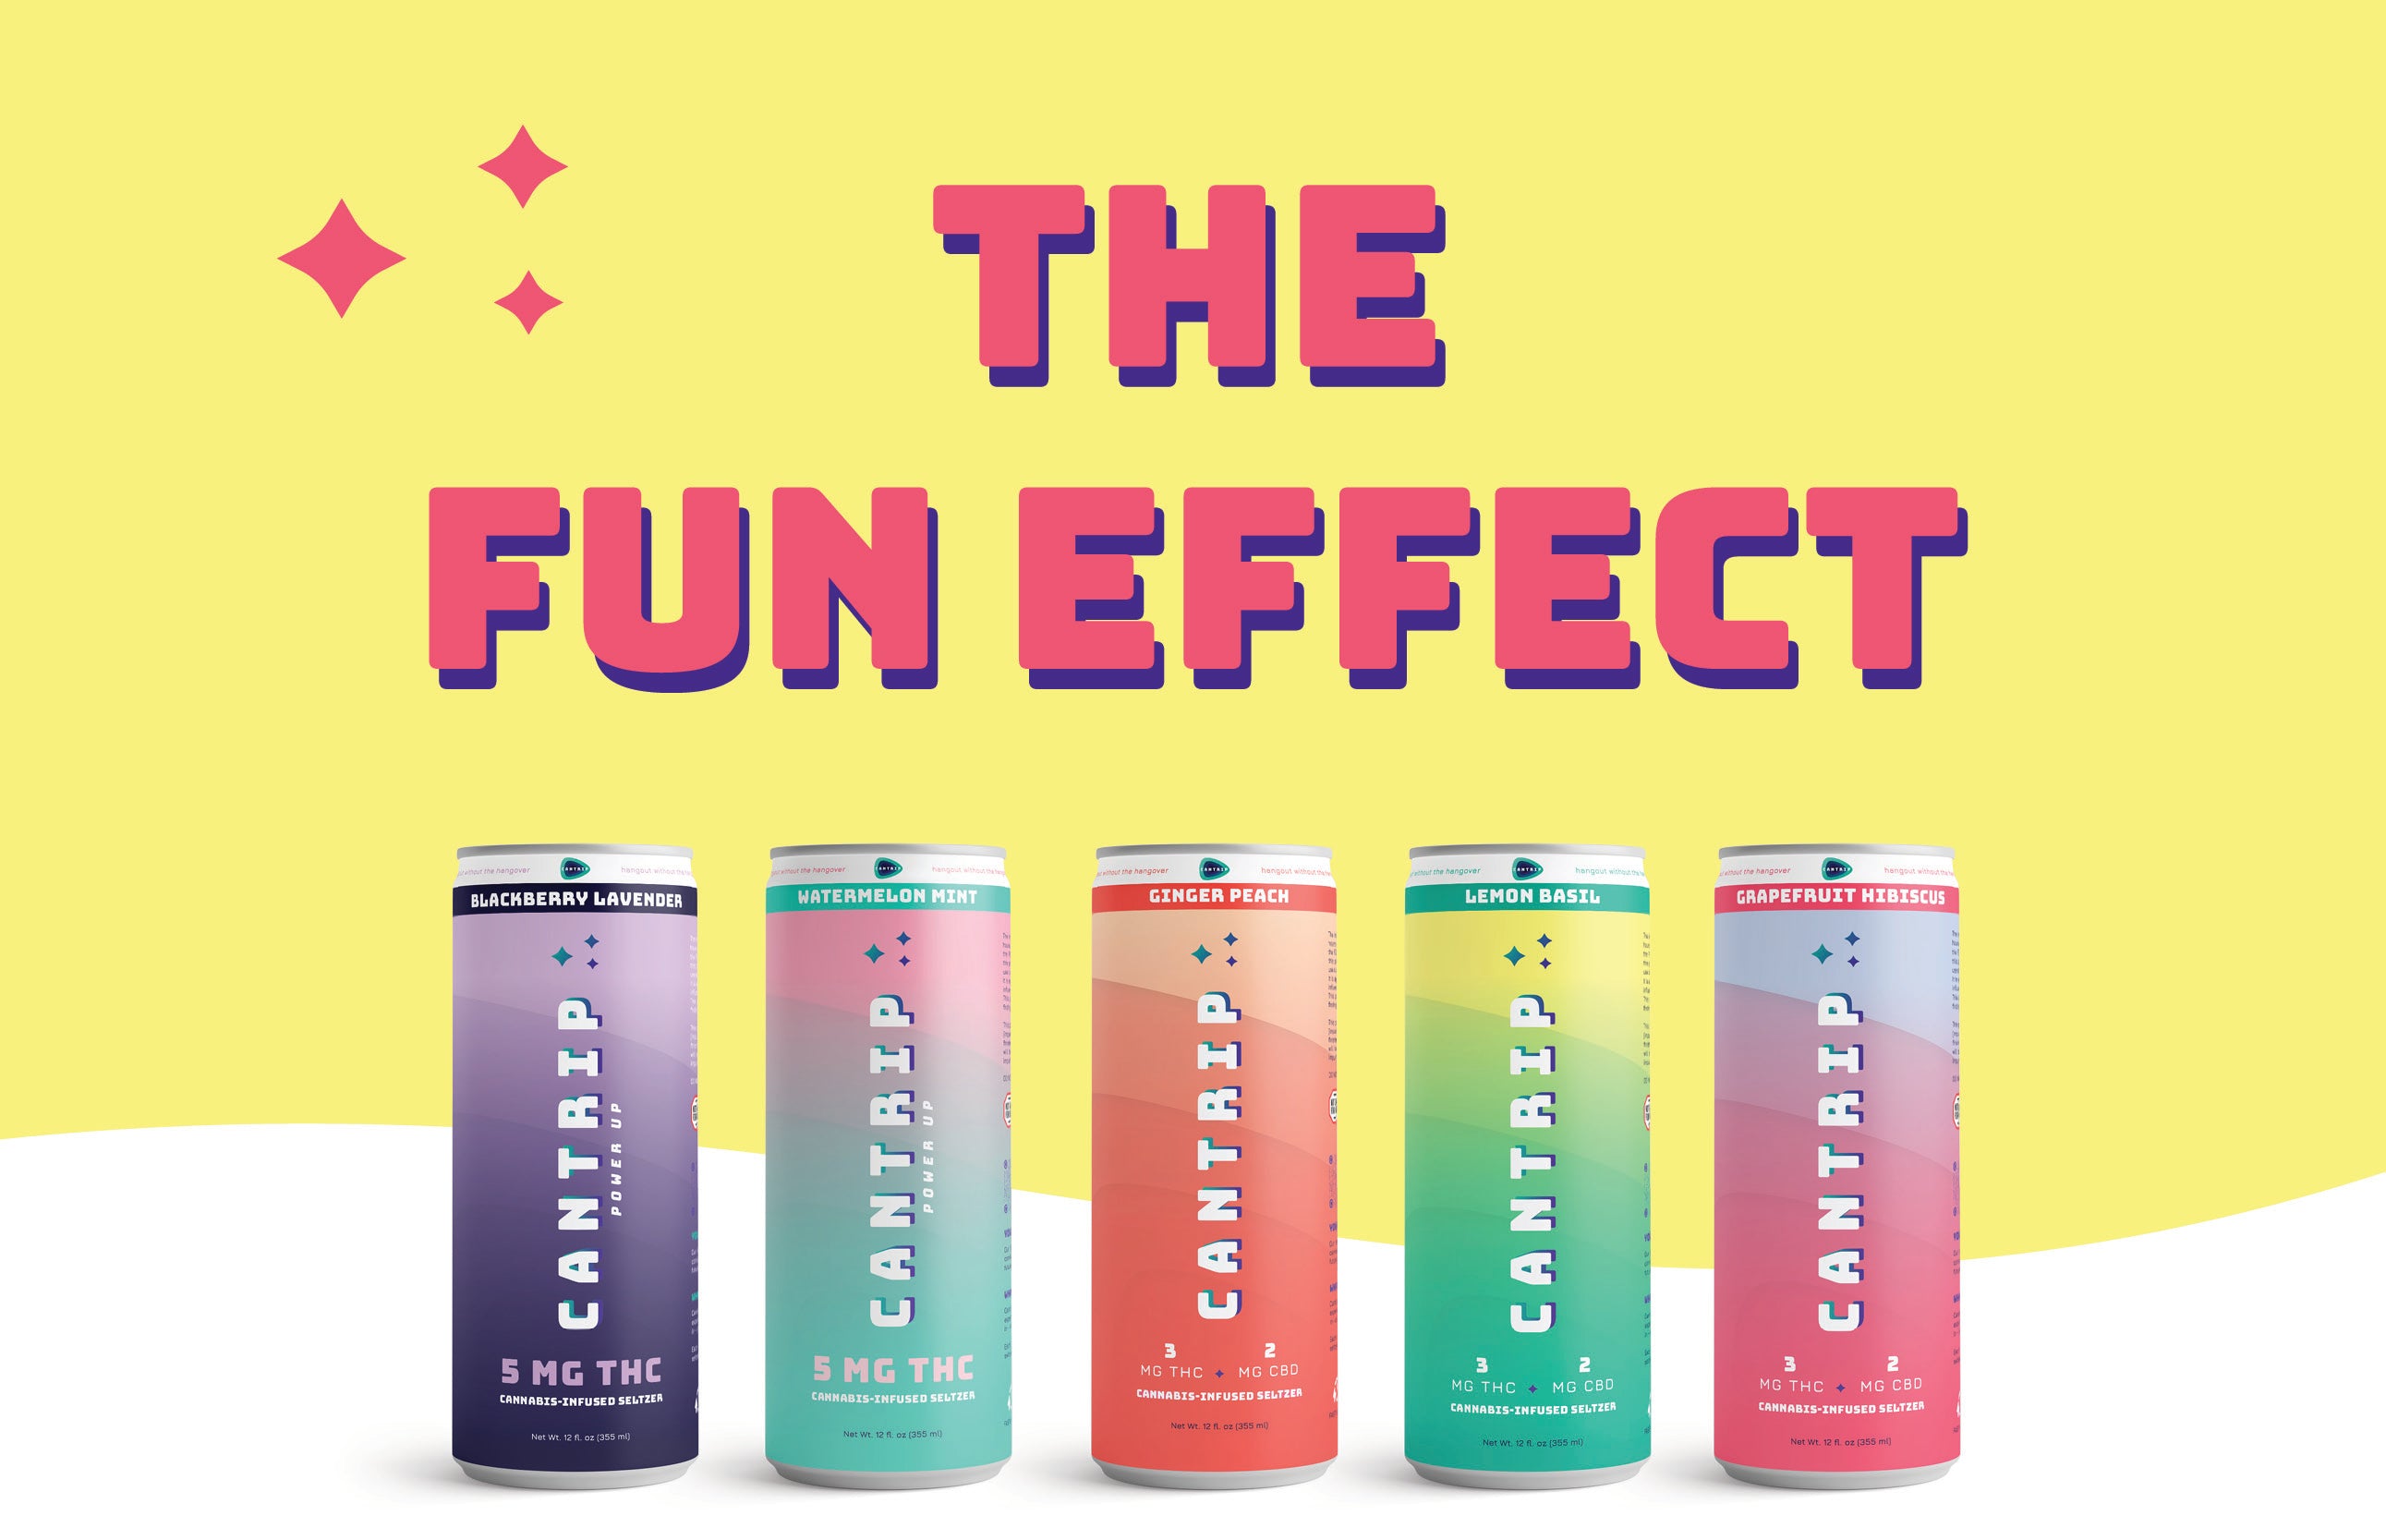 Effect Based Marketing & Cantrip’s Fun Effect